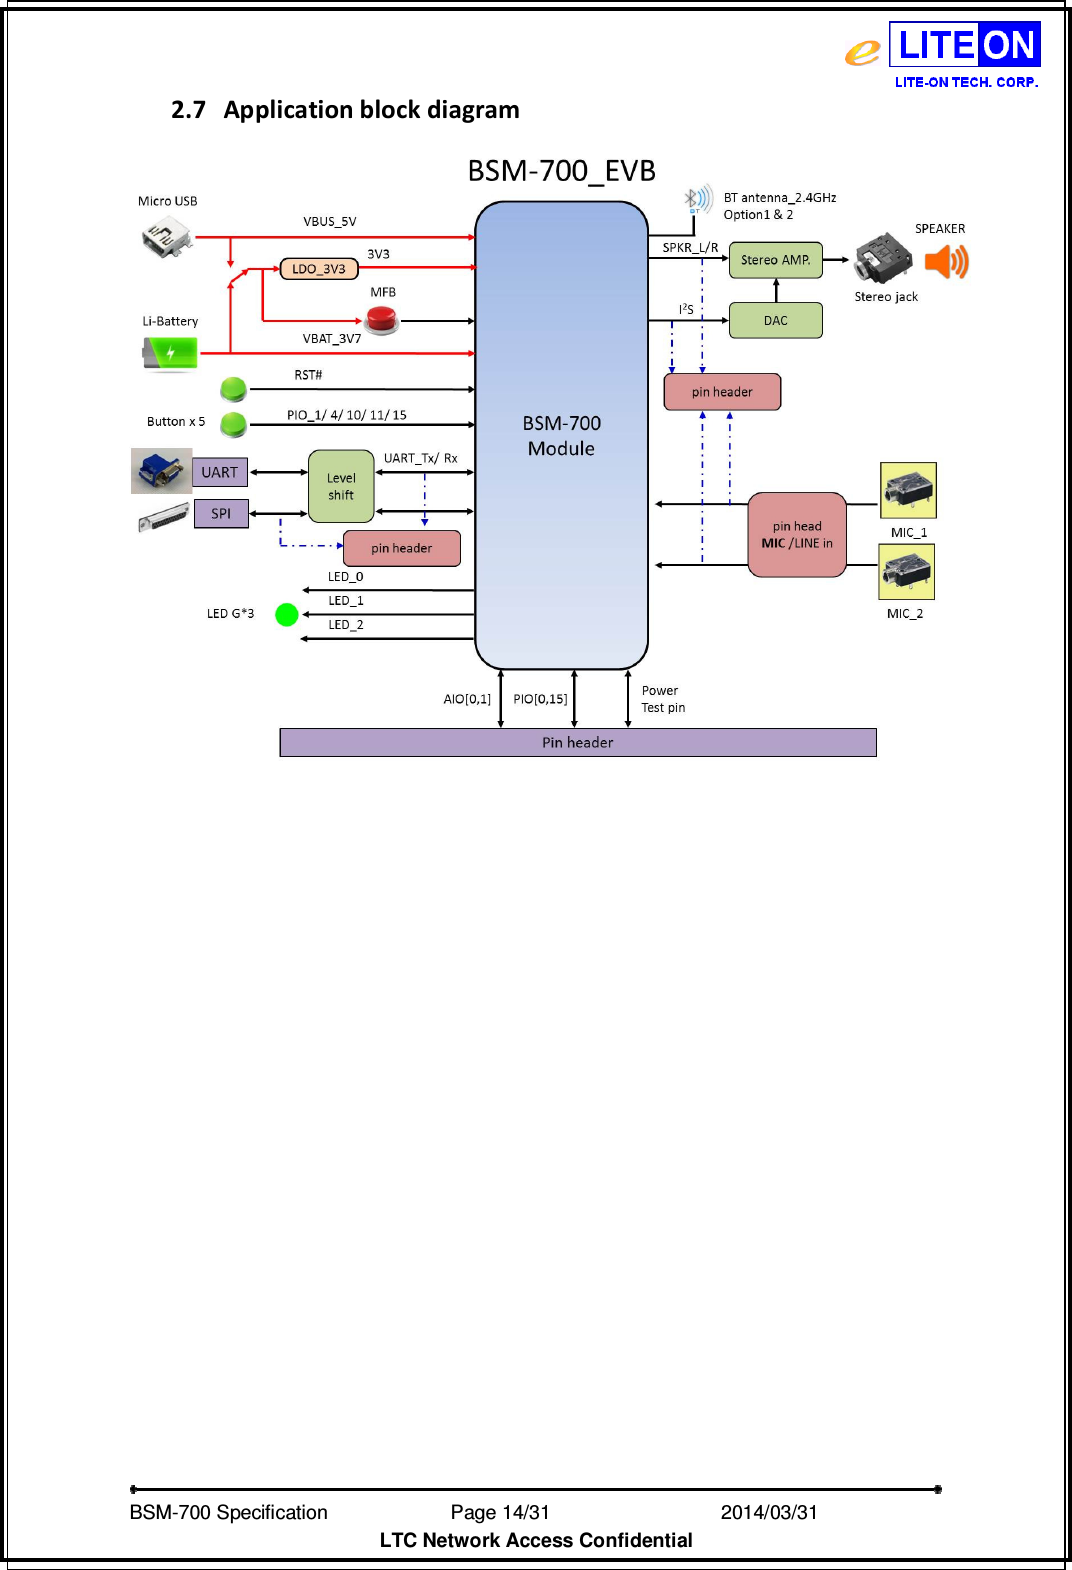   BSM-700 Specification                Page 14/31                           2014/03/31 LTC Network Access Confidential 2.7 Application block diagram  